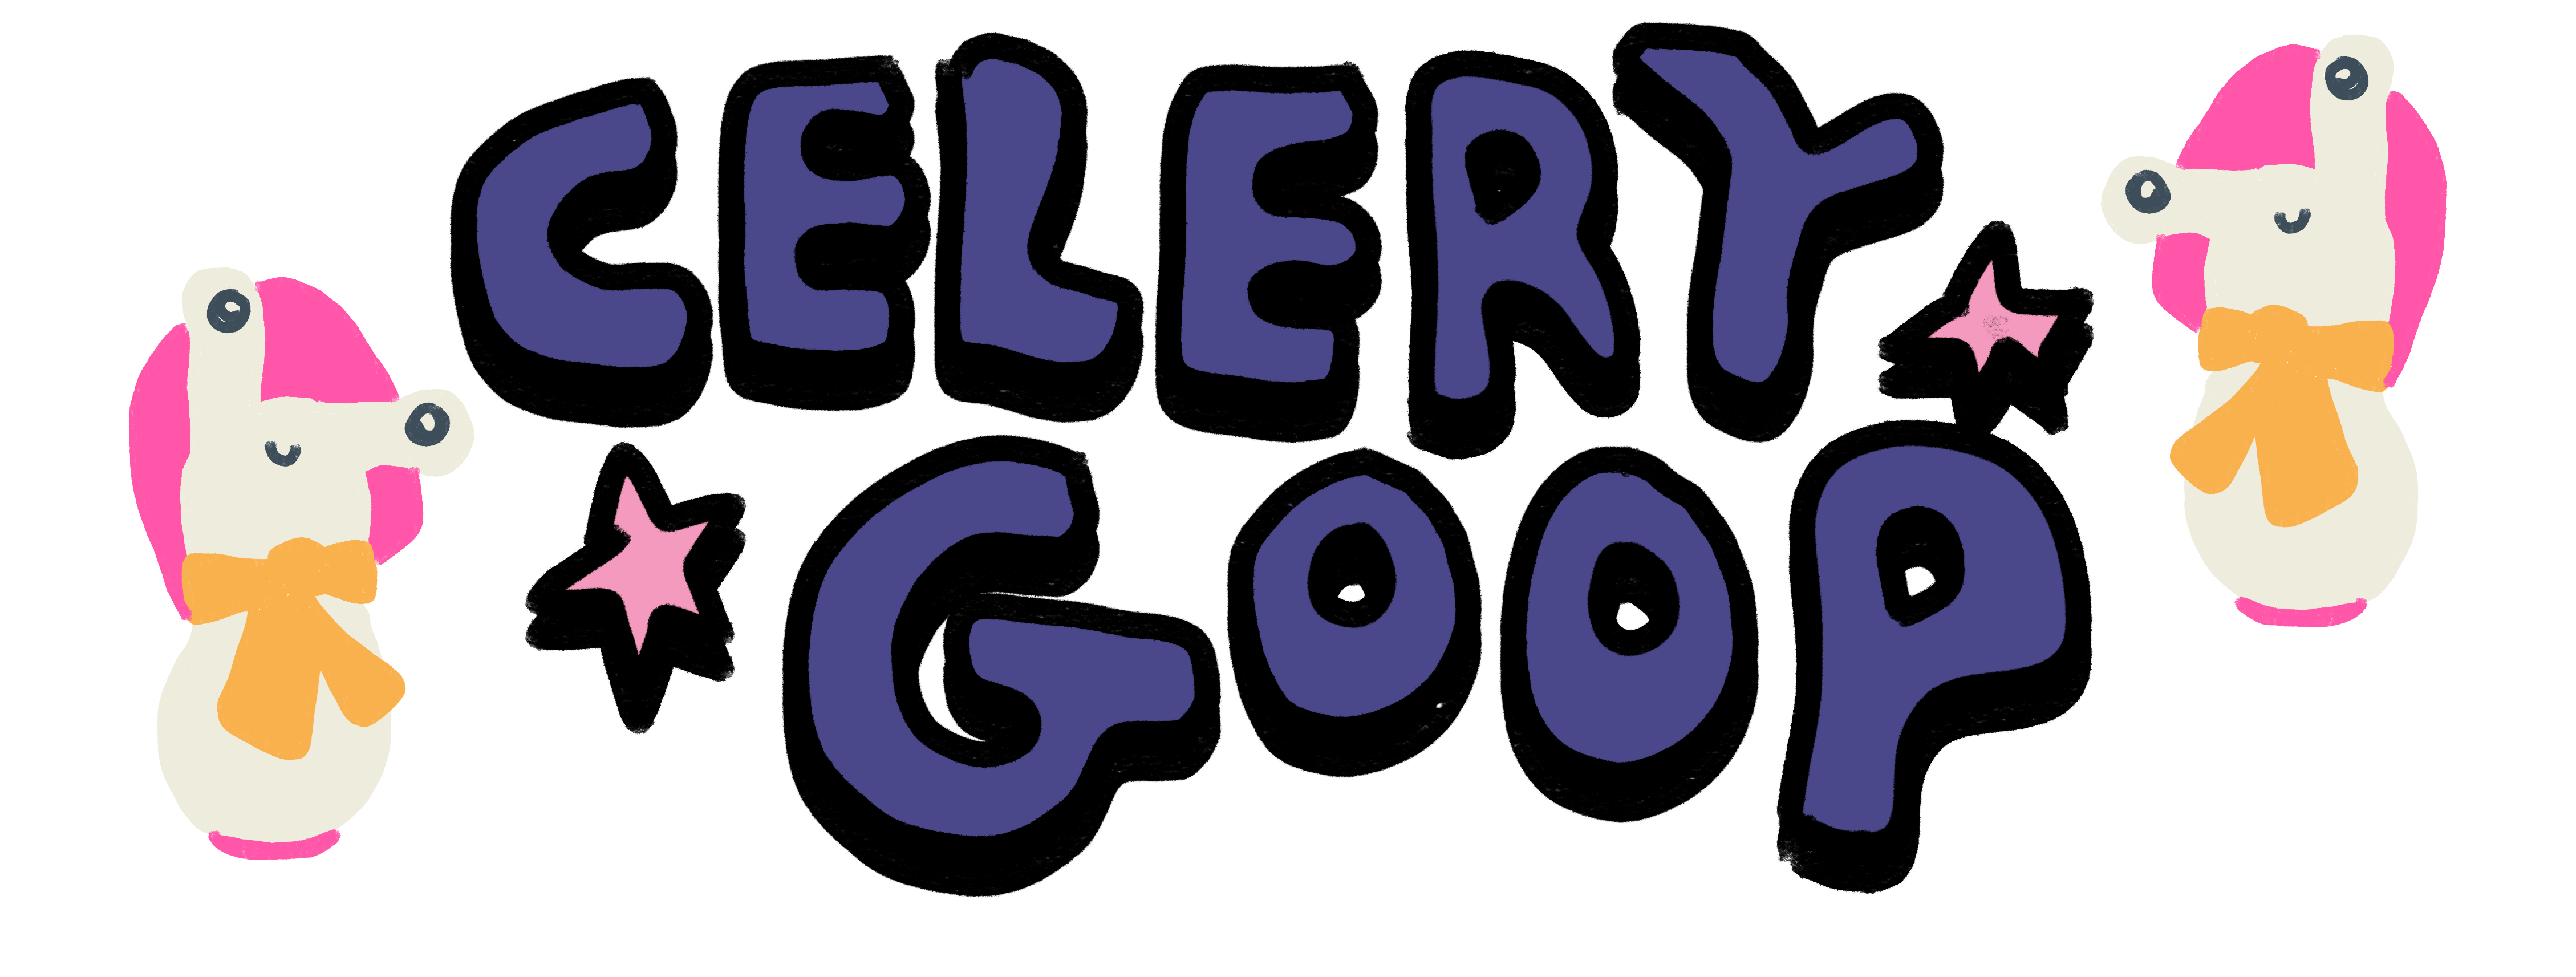 Celery Goop Header Image